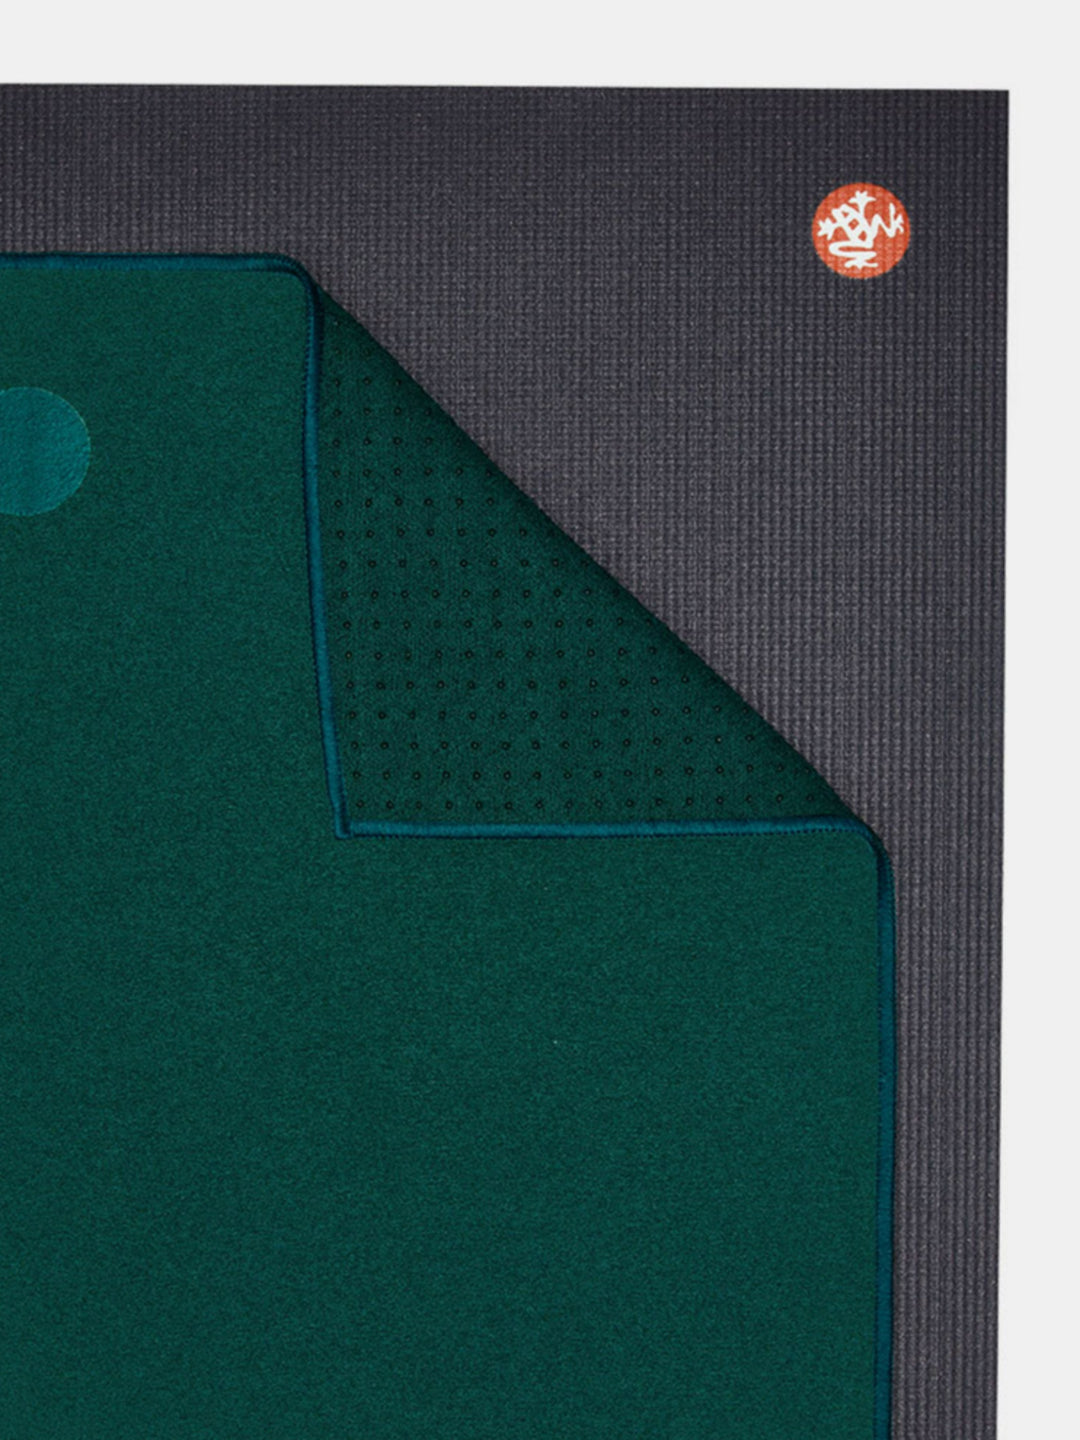 Yogitoes® Yoga Mat Towel – CorePower Yoga